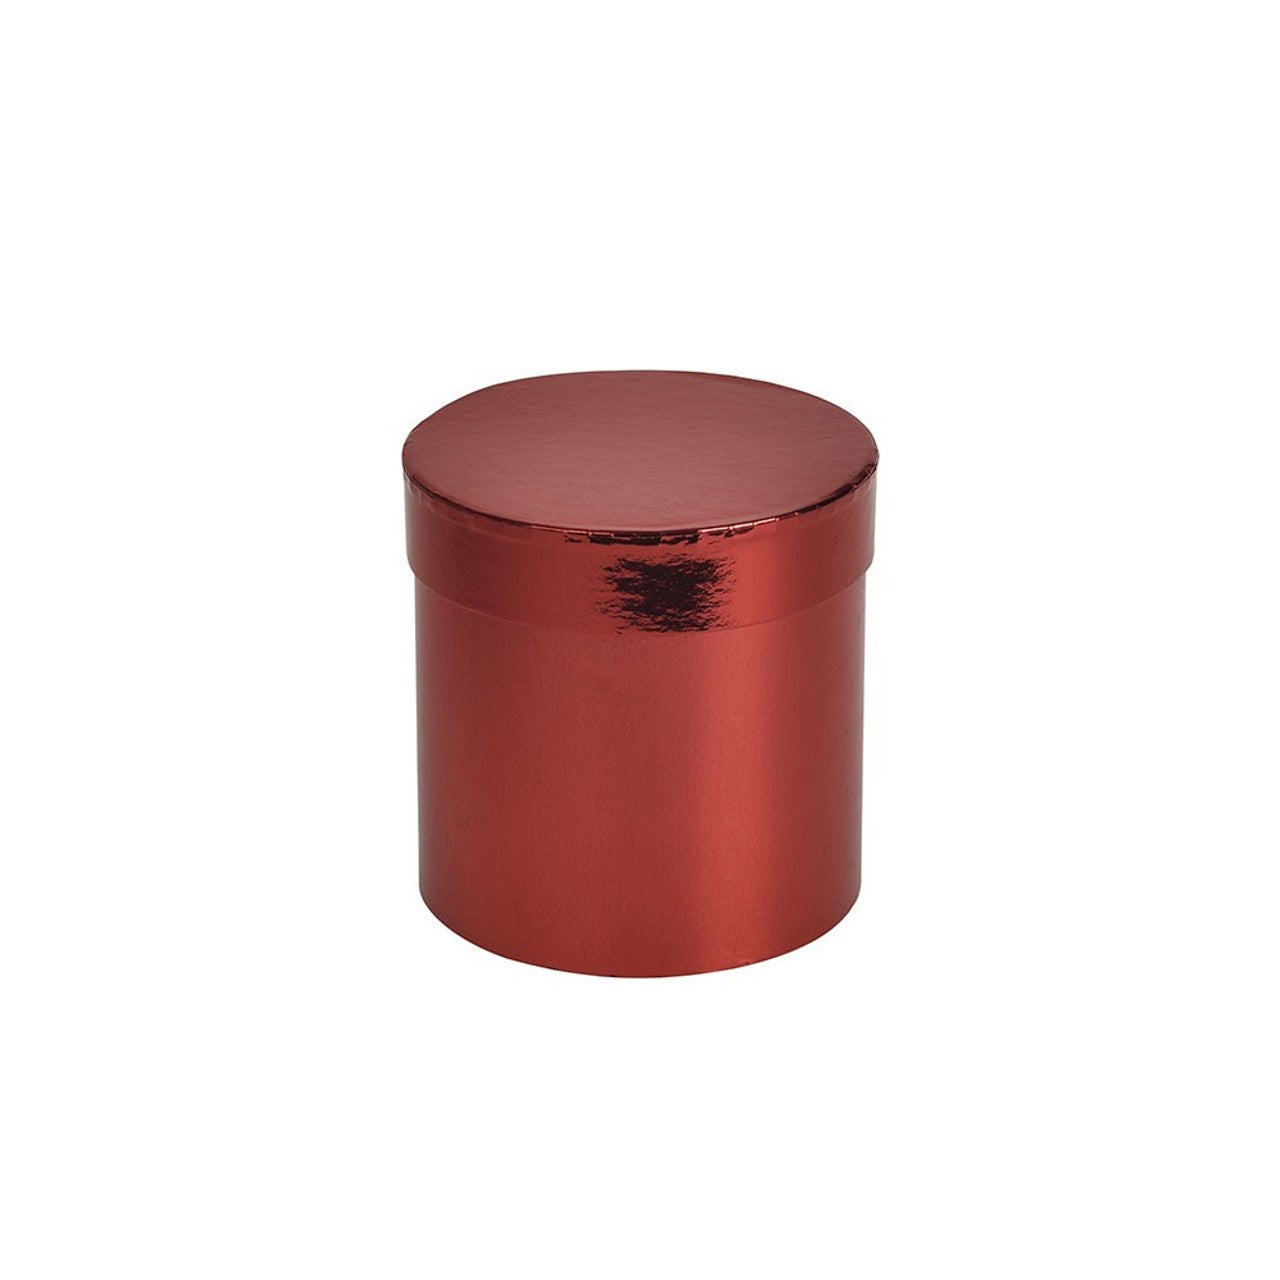 View Metallic Red Small Hat Box W13cm x D14cm information